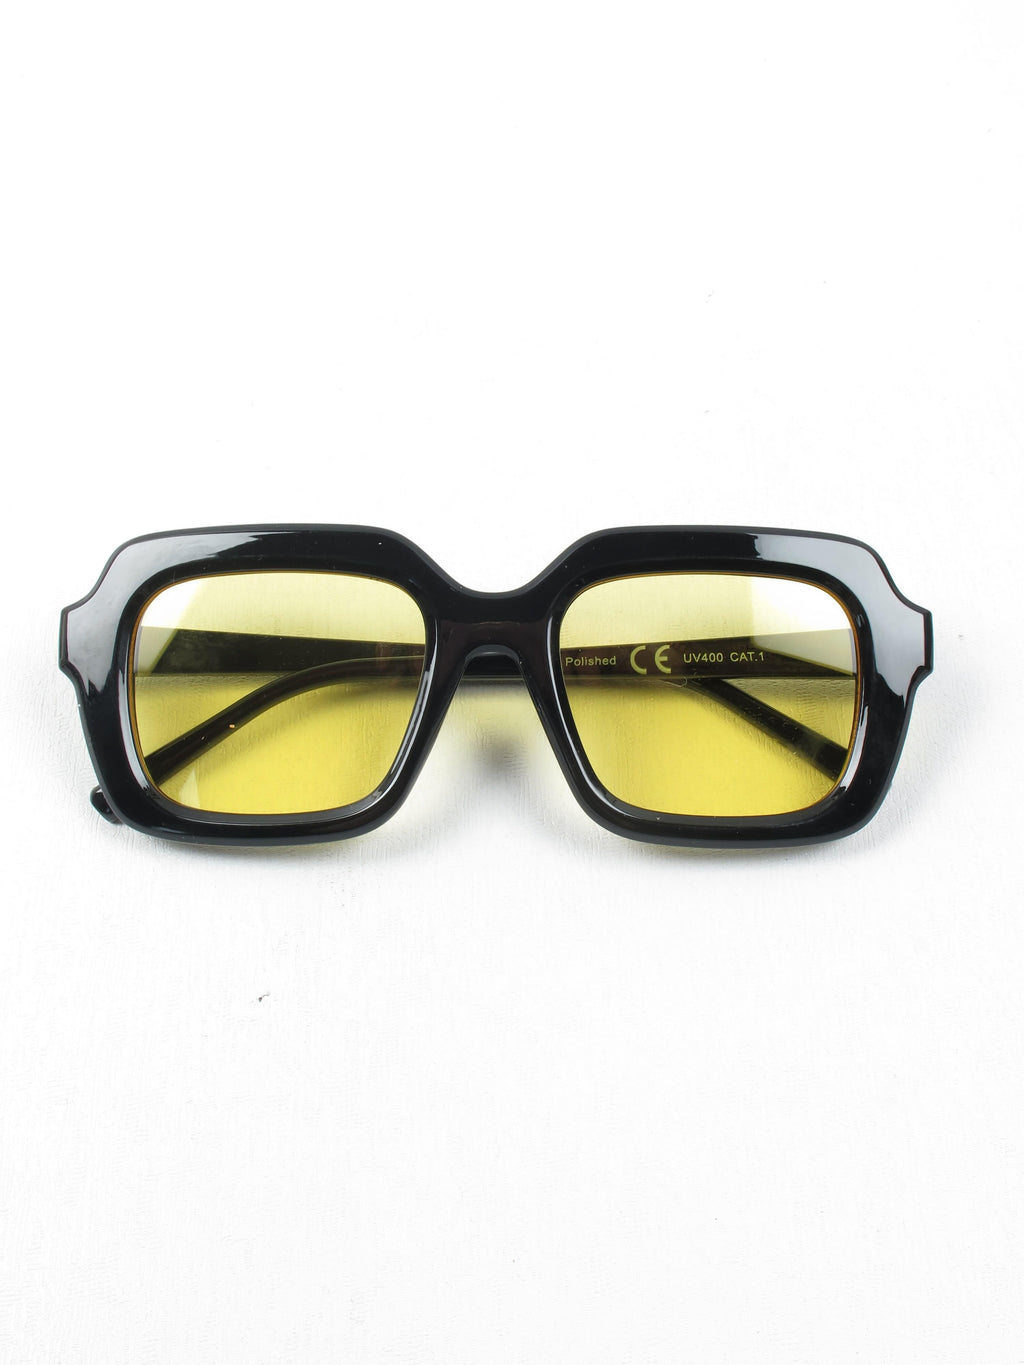 70s Square Sunglasses - The Harlequin